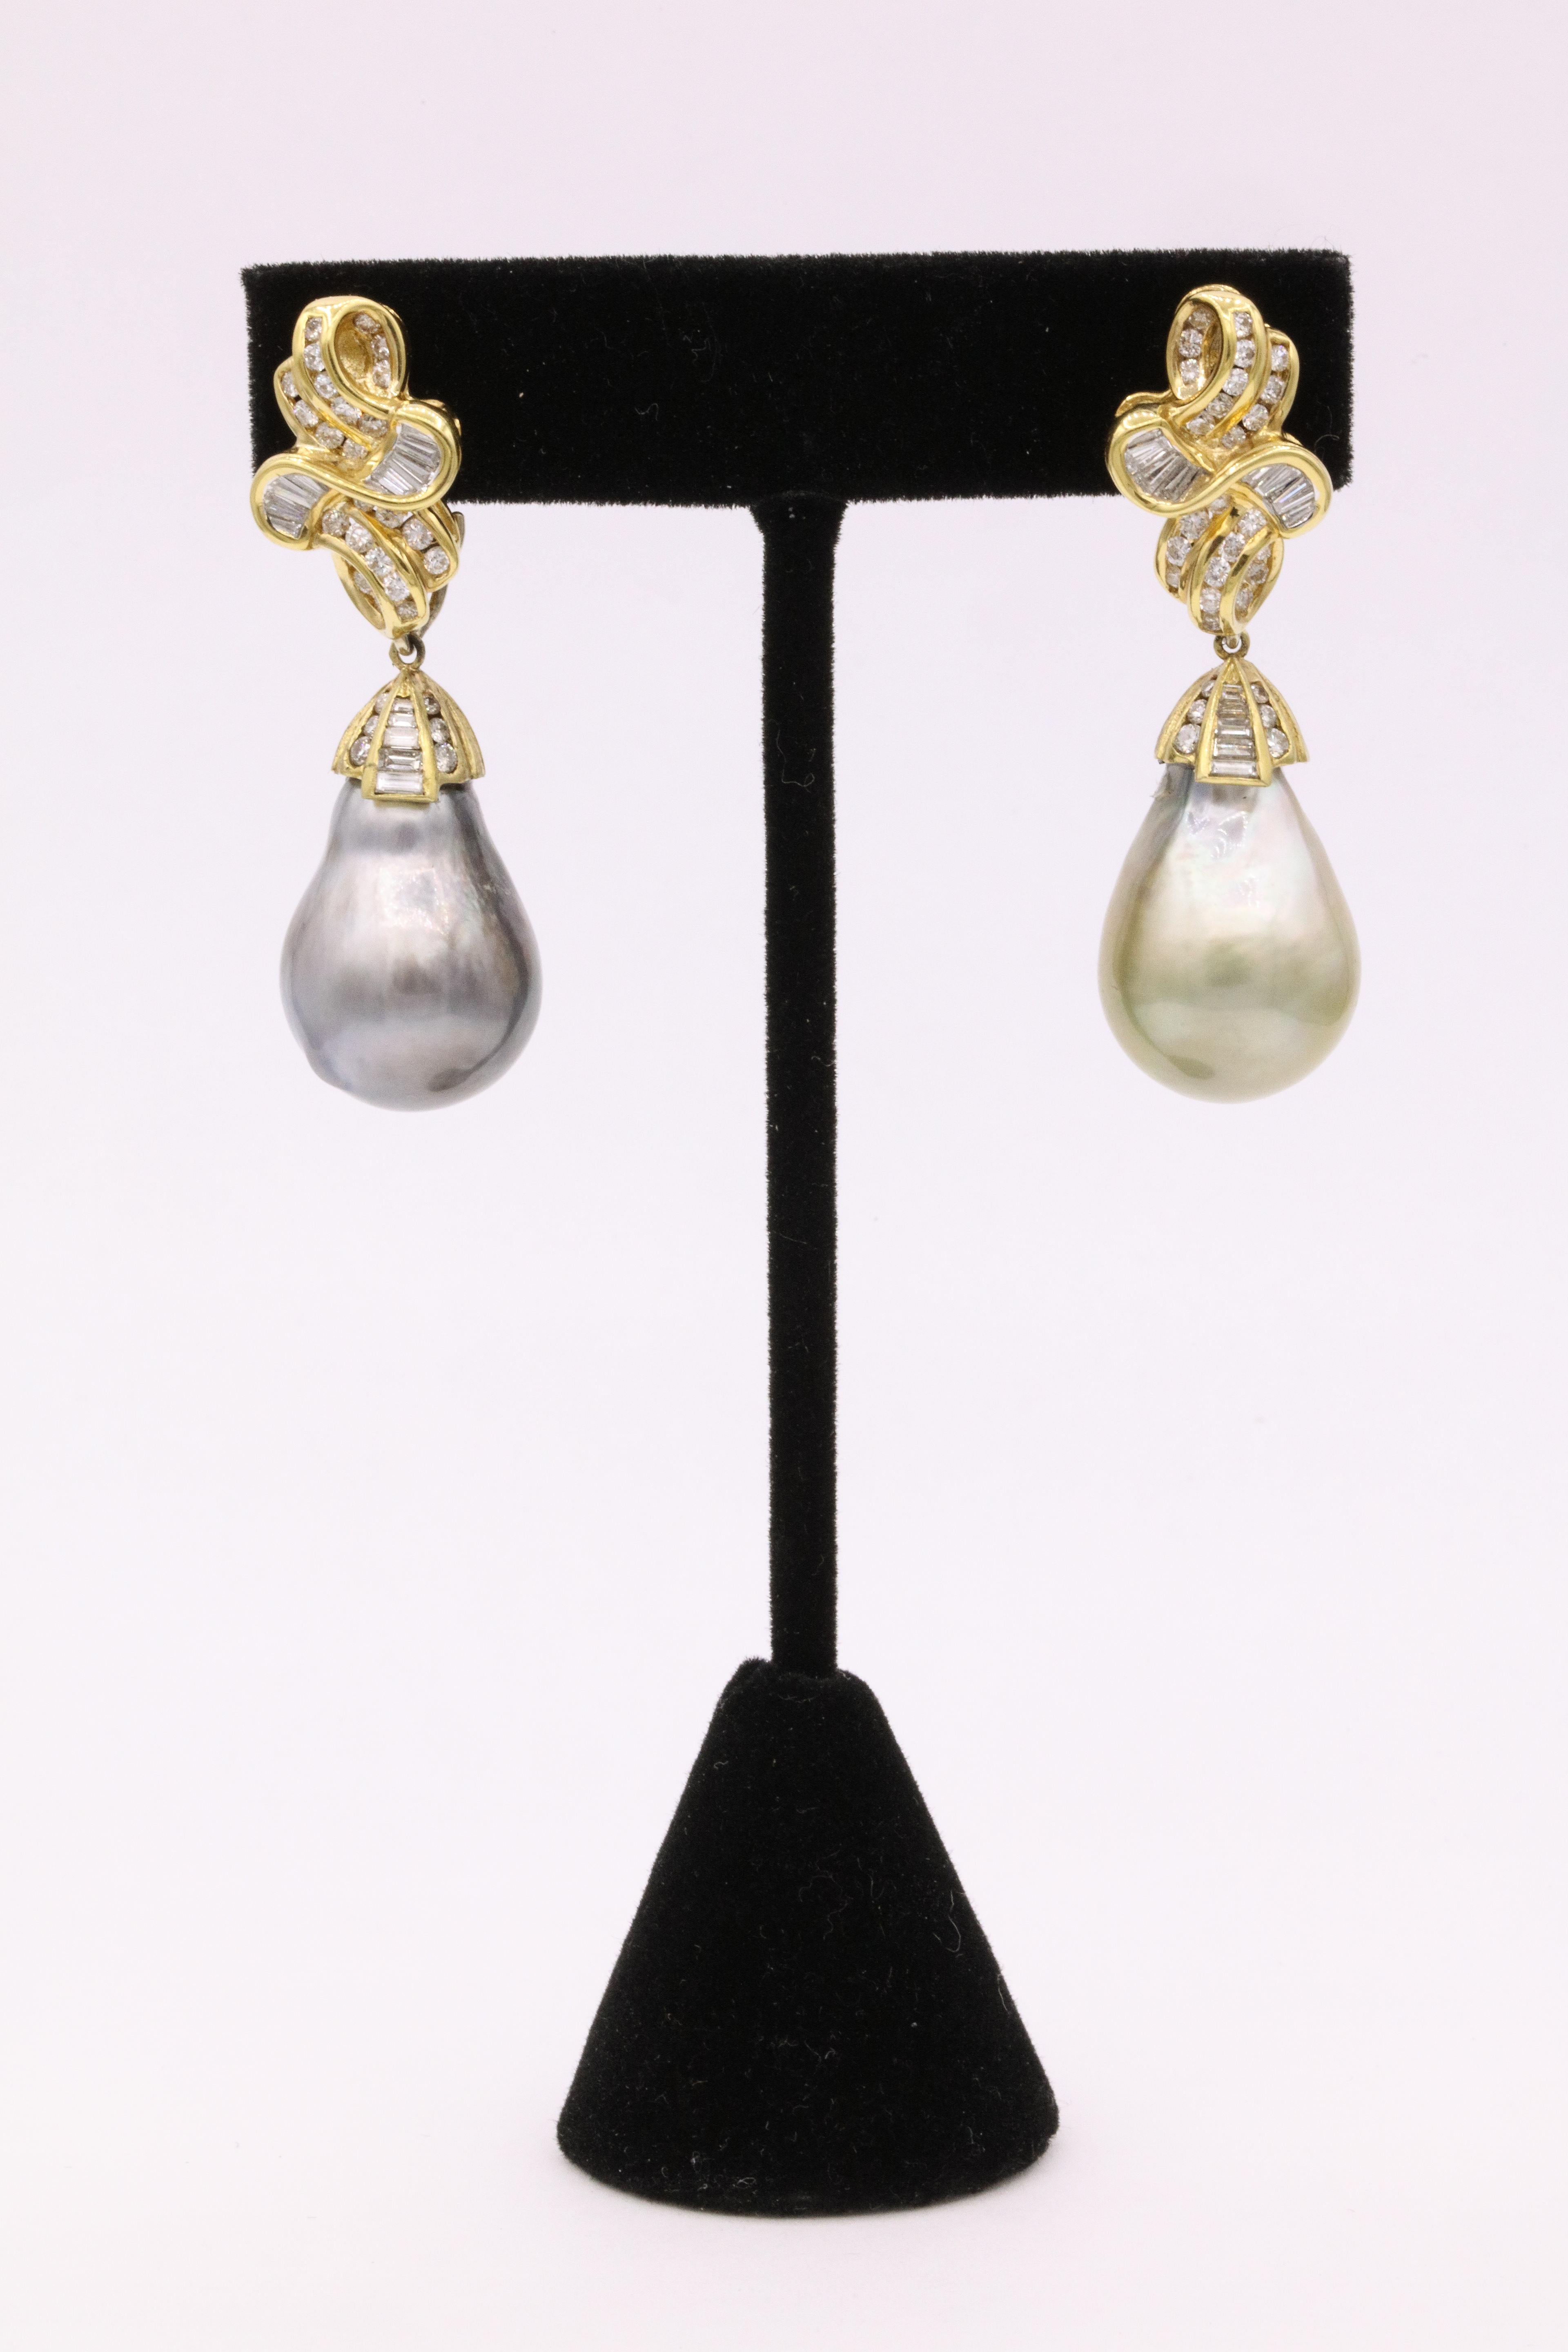 Contemporary Day and Night Tahitian Pearl Diamond Earrings 4 Carat 18 Karat Gold